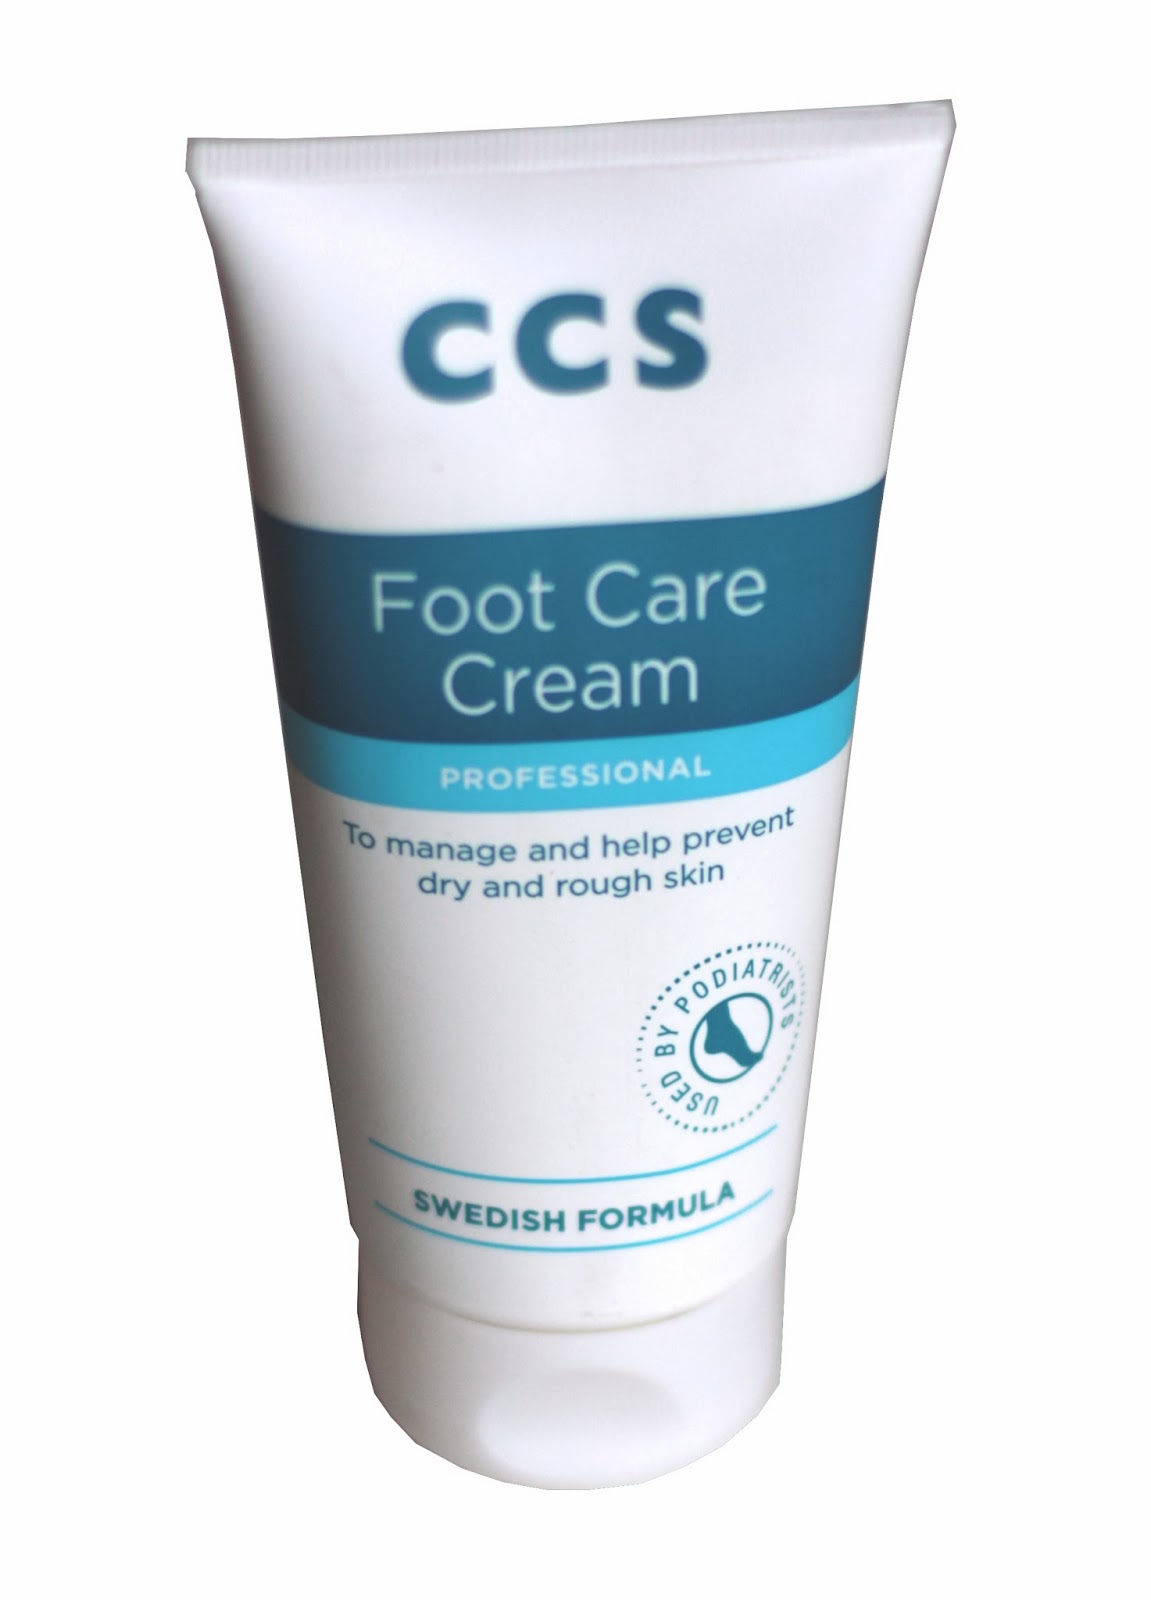 Scholl Express Pedi Hard Skin Remover and CCS Foot Care Cream